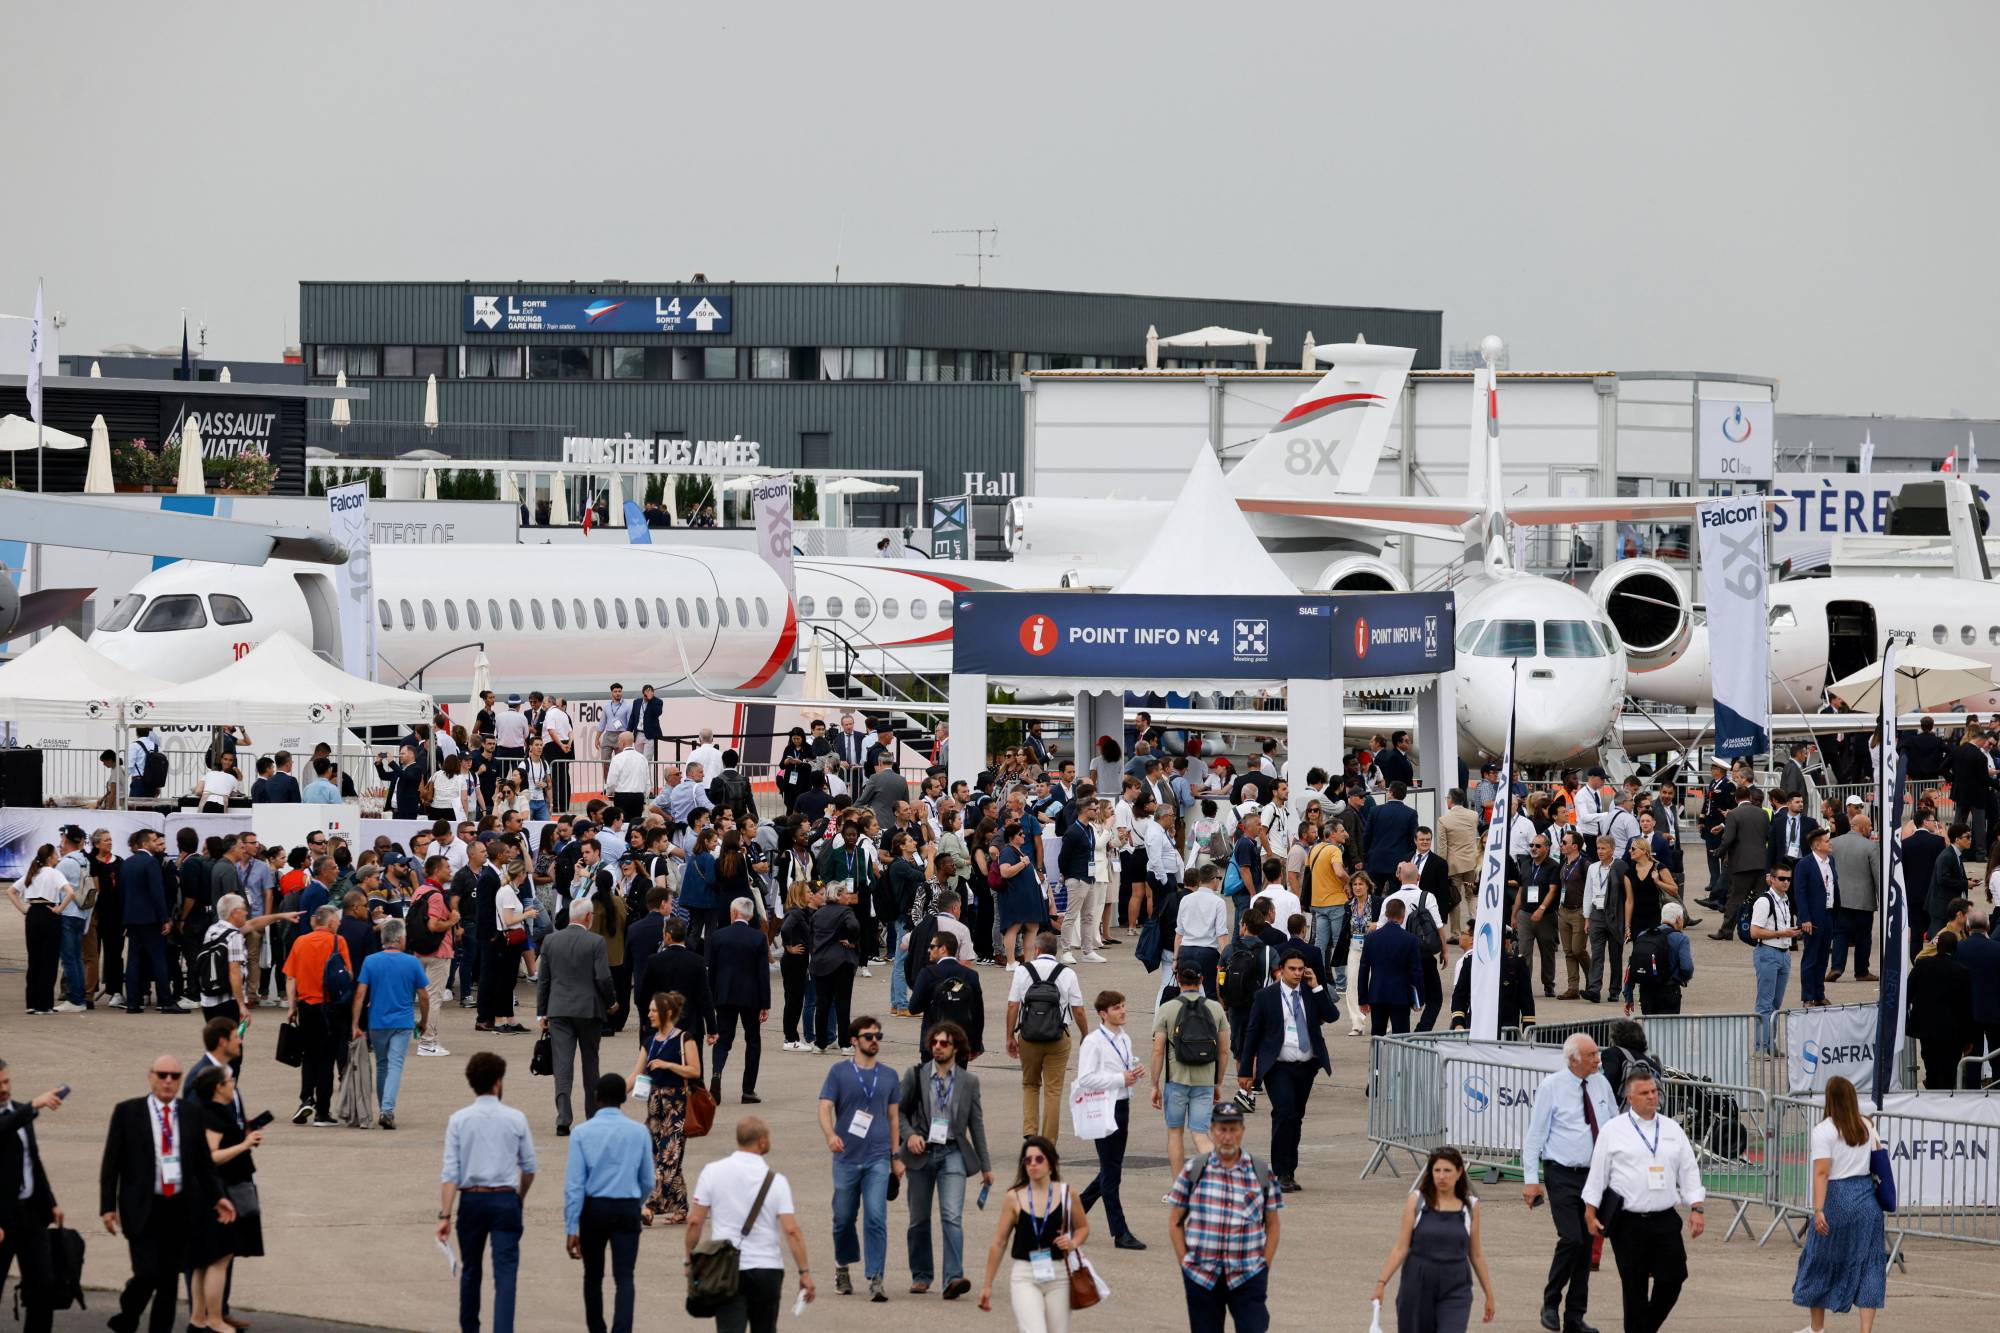 Visitors attend the International Paris Air Show at the Paris-Le Bourget Airport, France, on Monday. | POOL / VIA REUTERS